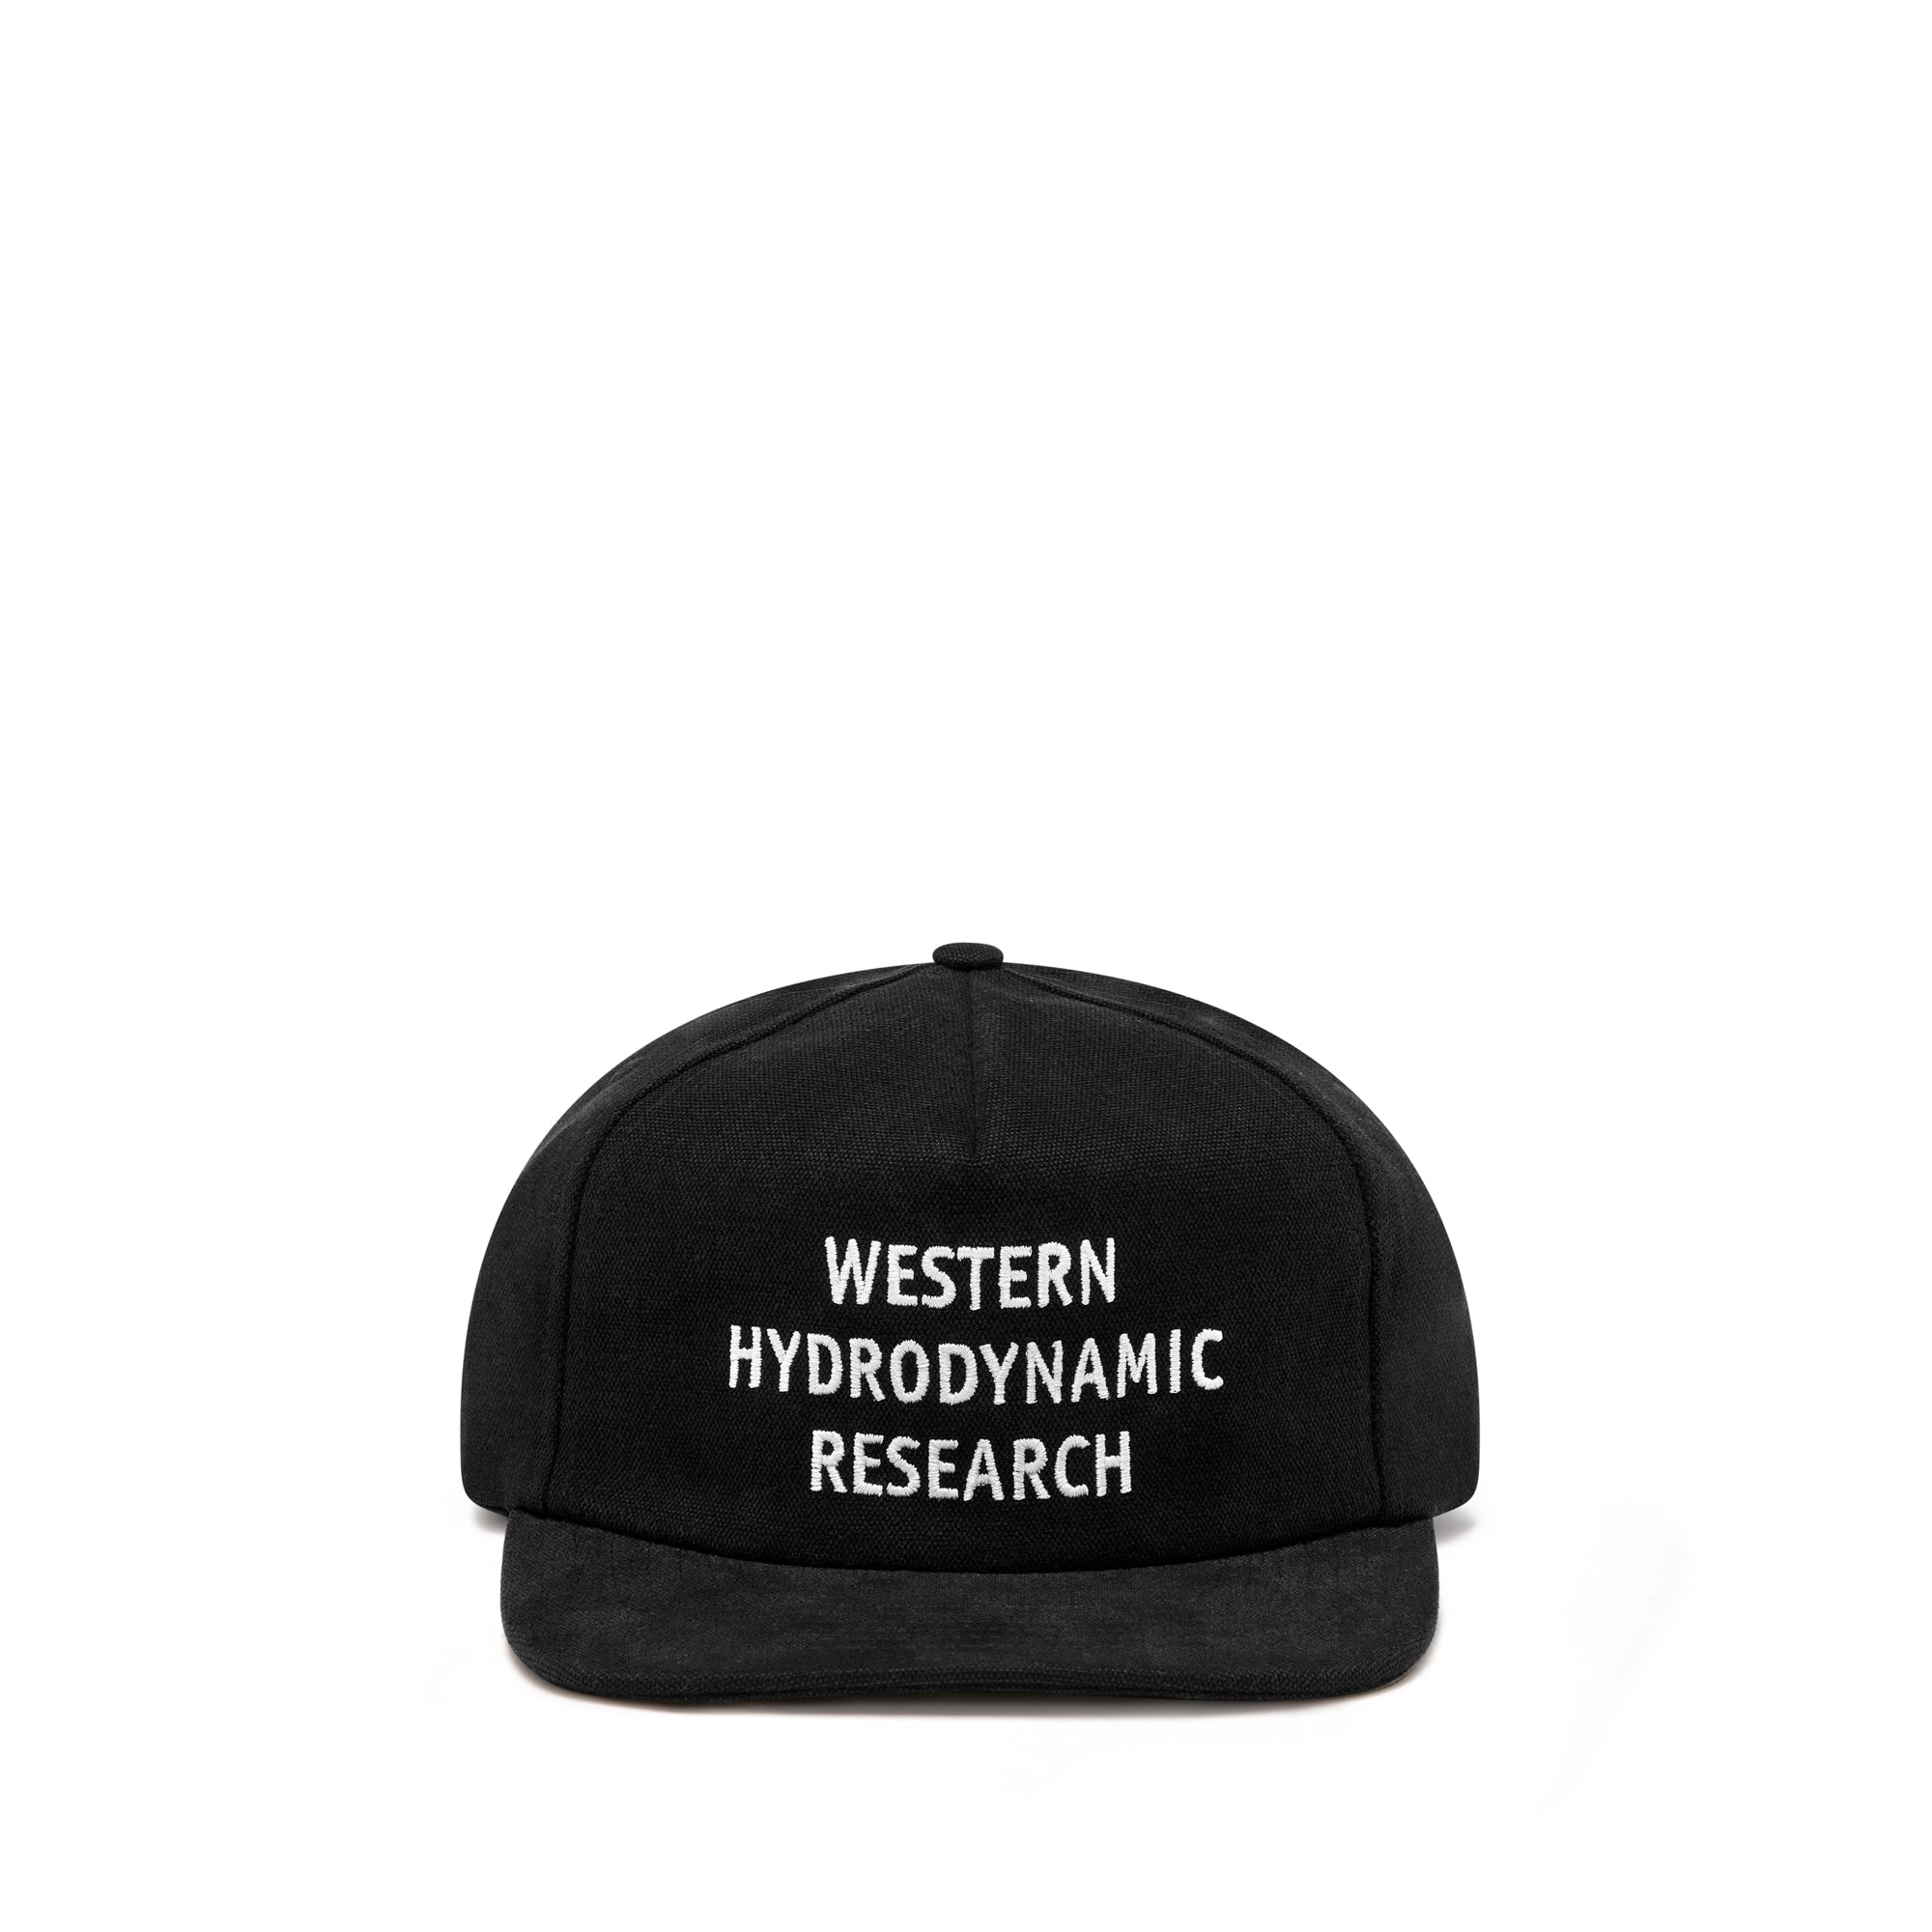 Western Hydrodynamic Research Men's Canvas Promo Hat (Black